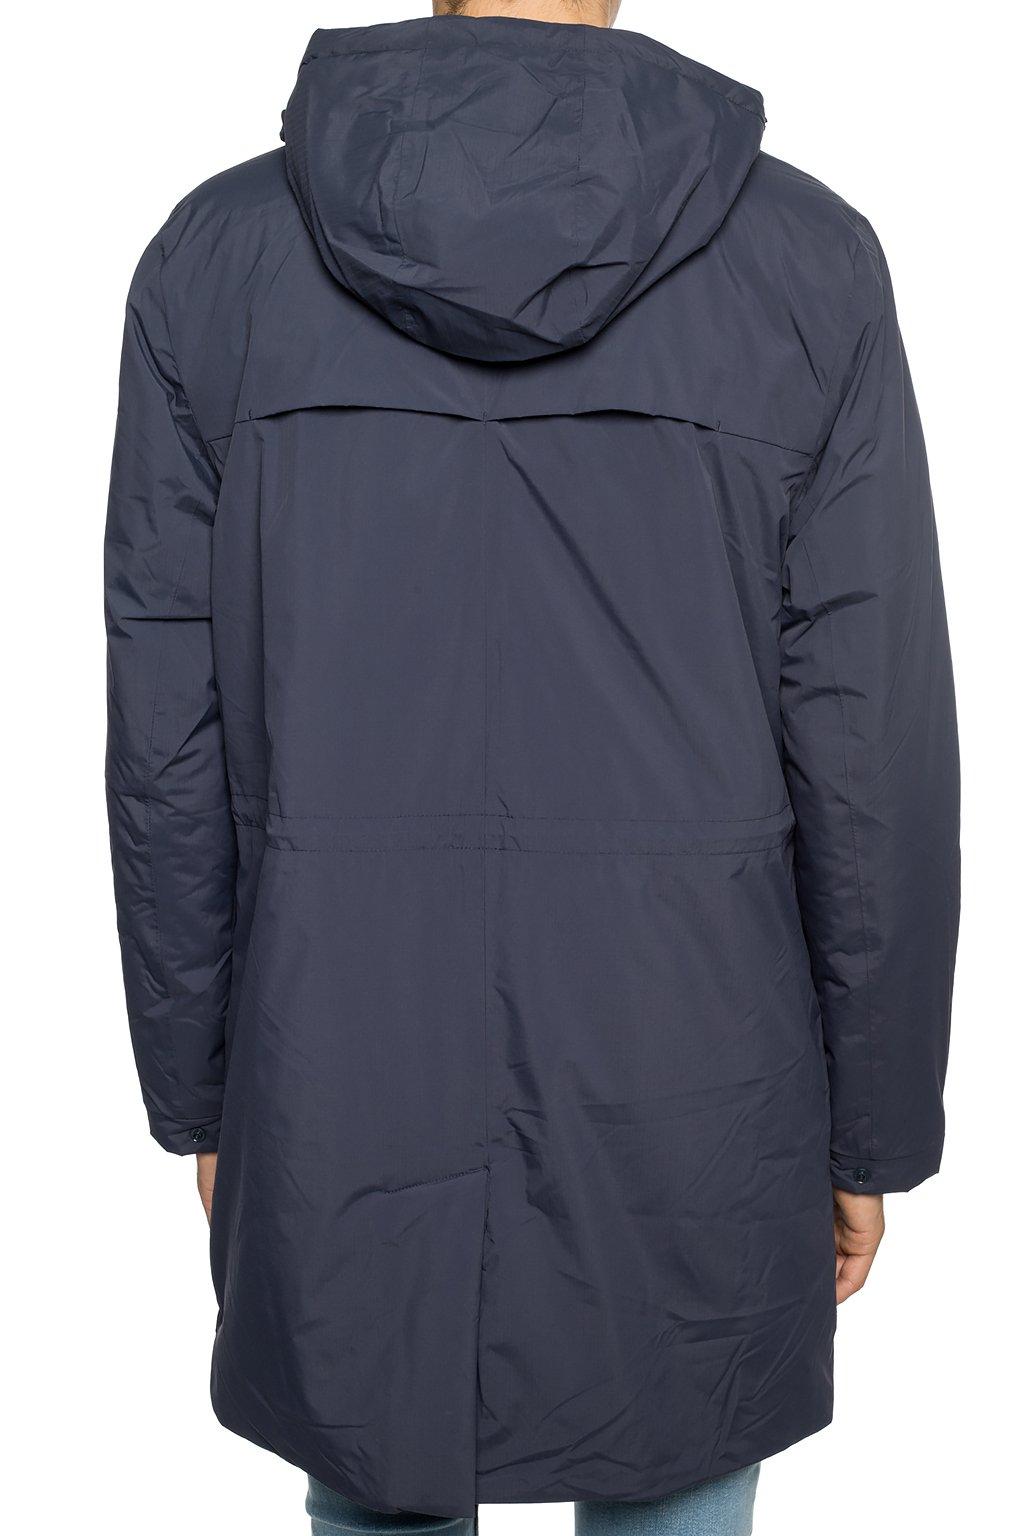 K-Way Fur 'remi' Hooded Jacket in Navy Blue (Blue) for Men - Lyst